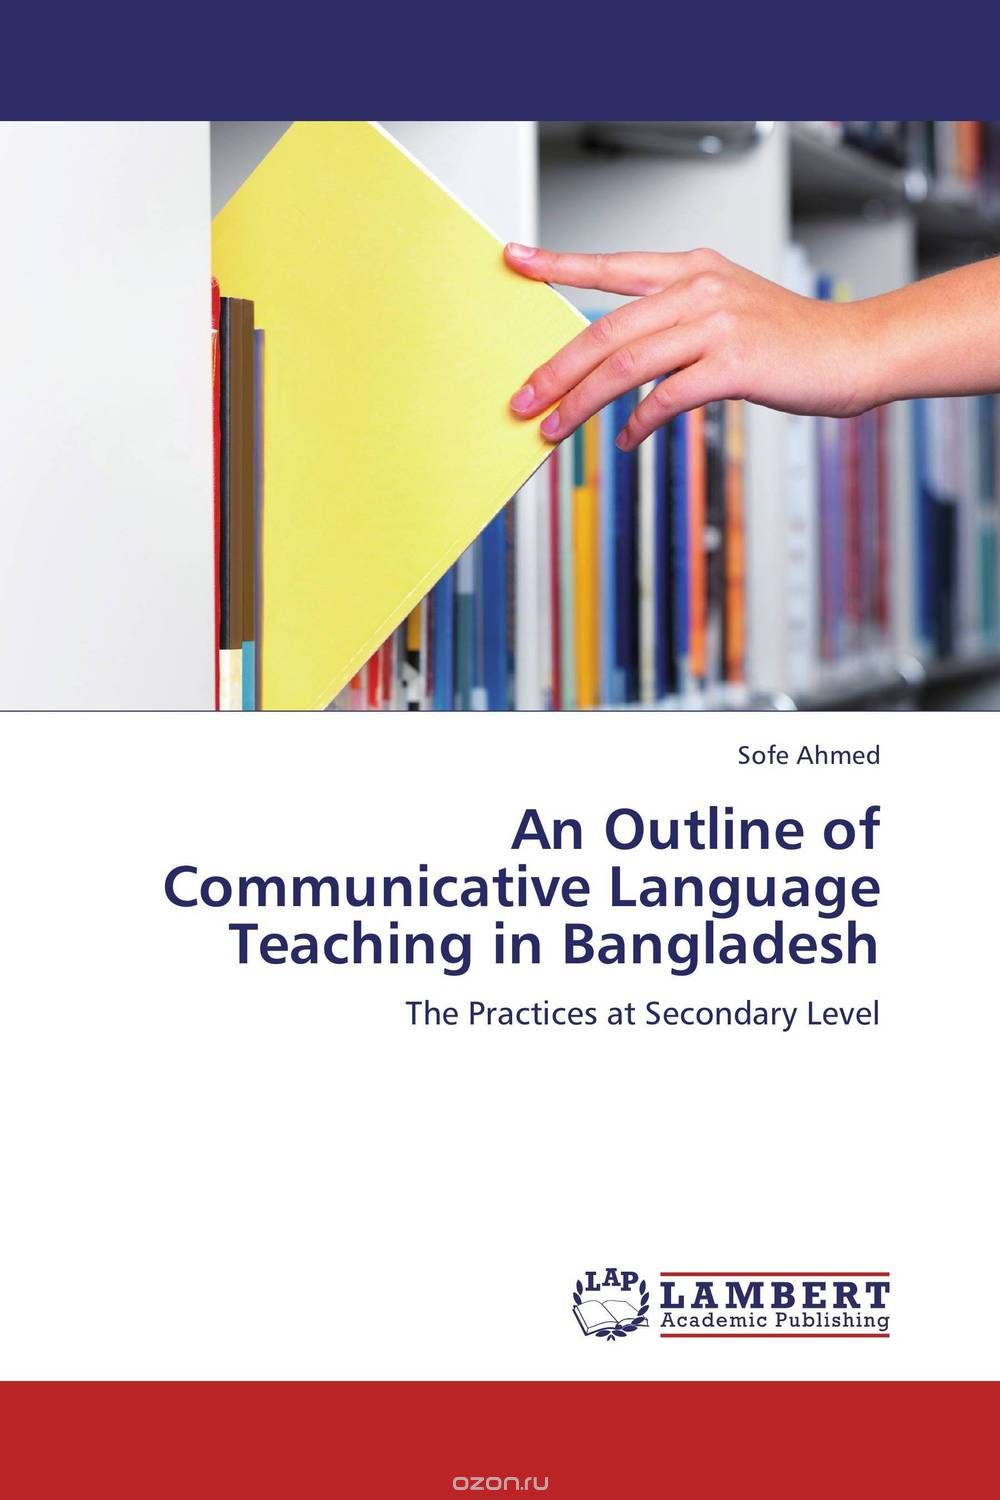 An Outline of Communicative Language Teaching in Bangladesh